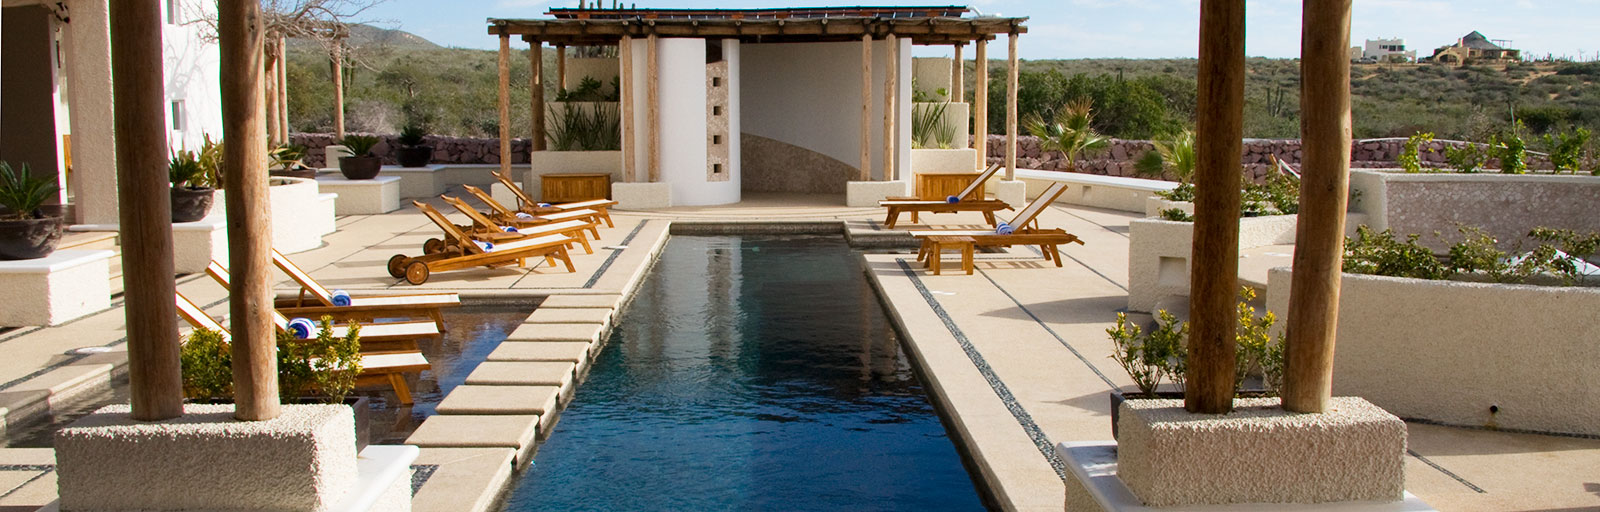 Spa & Yoga Retreat in Mexico: Swim Laps in the Pool